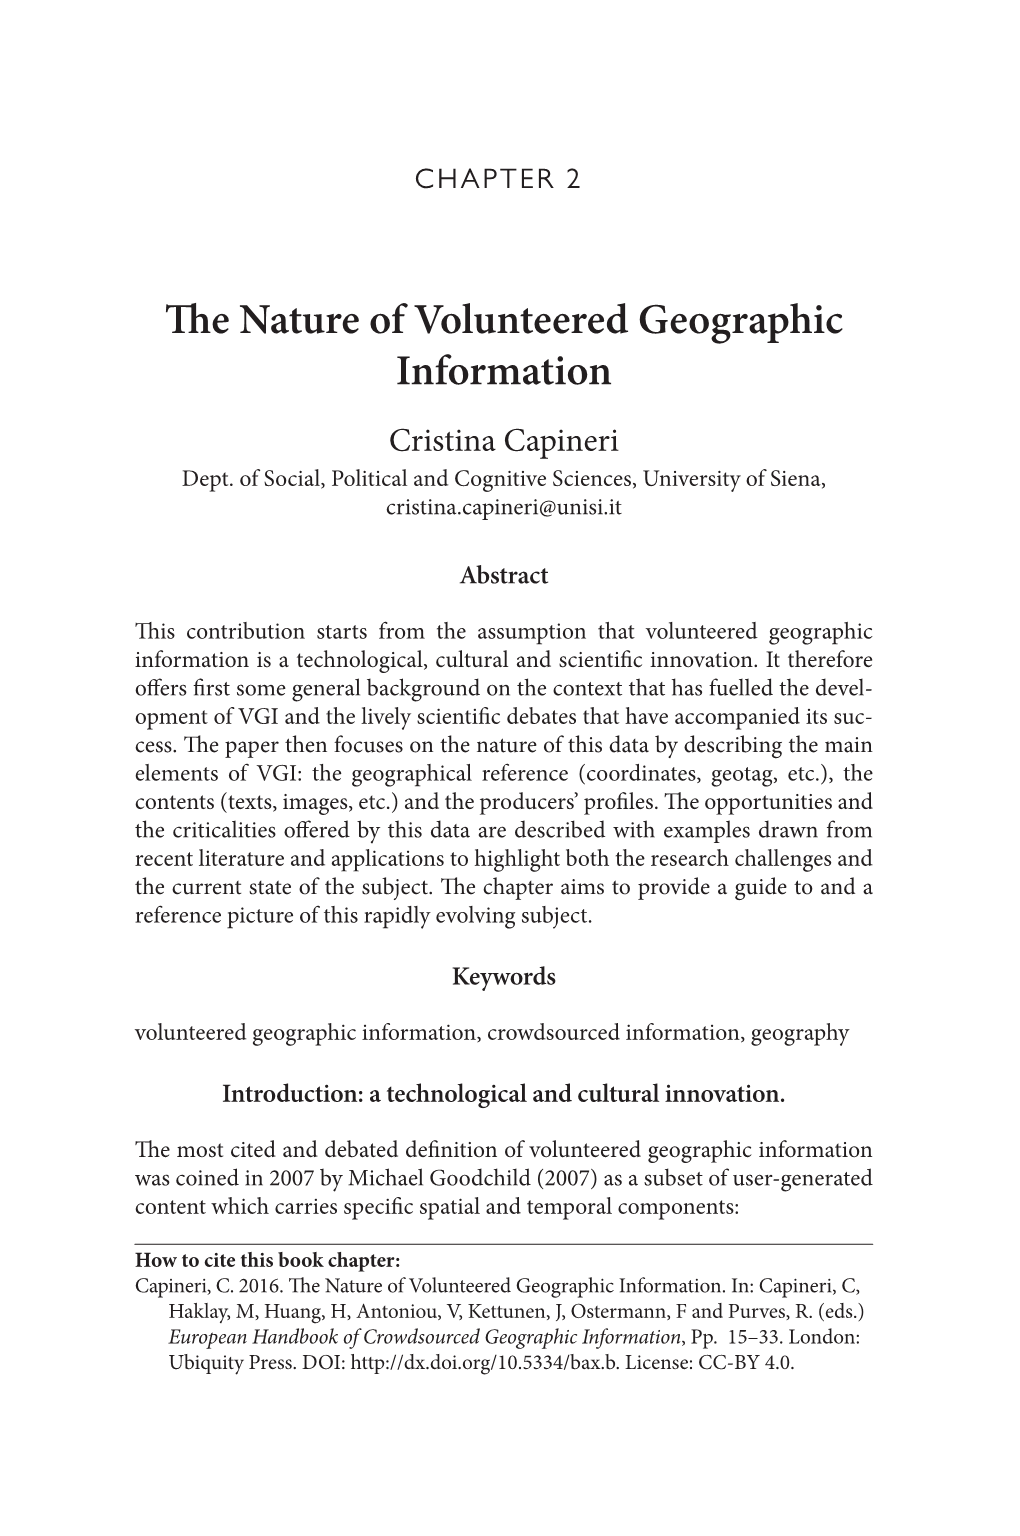 The Nature of Volunteered Geographic Information Cristina Capineri Dept